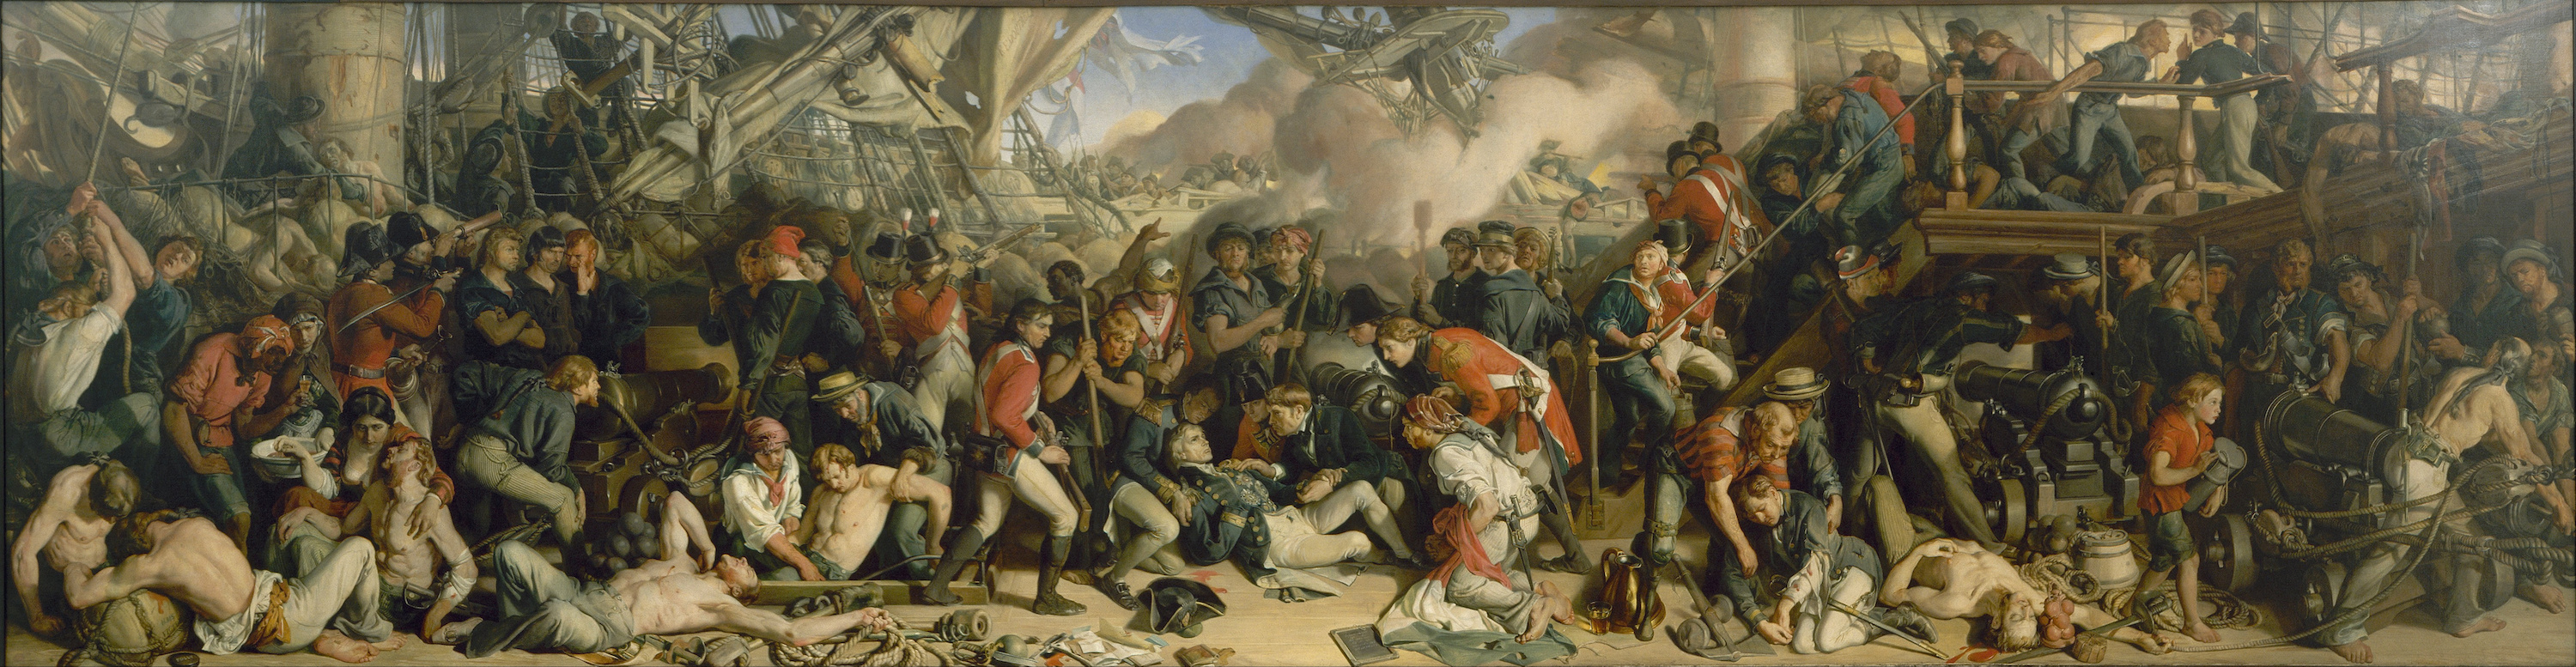 Smrt lorda Nelsona by Daniel Maclise - 1859–1861 - 98,5 x 353 cm 